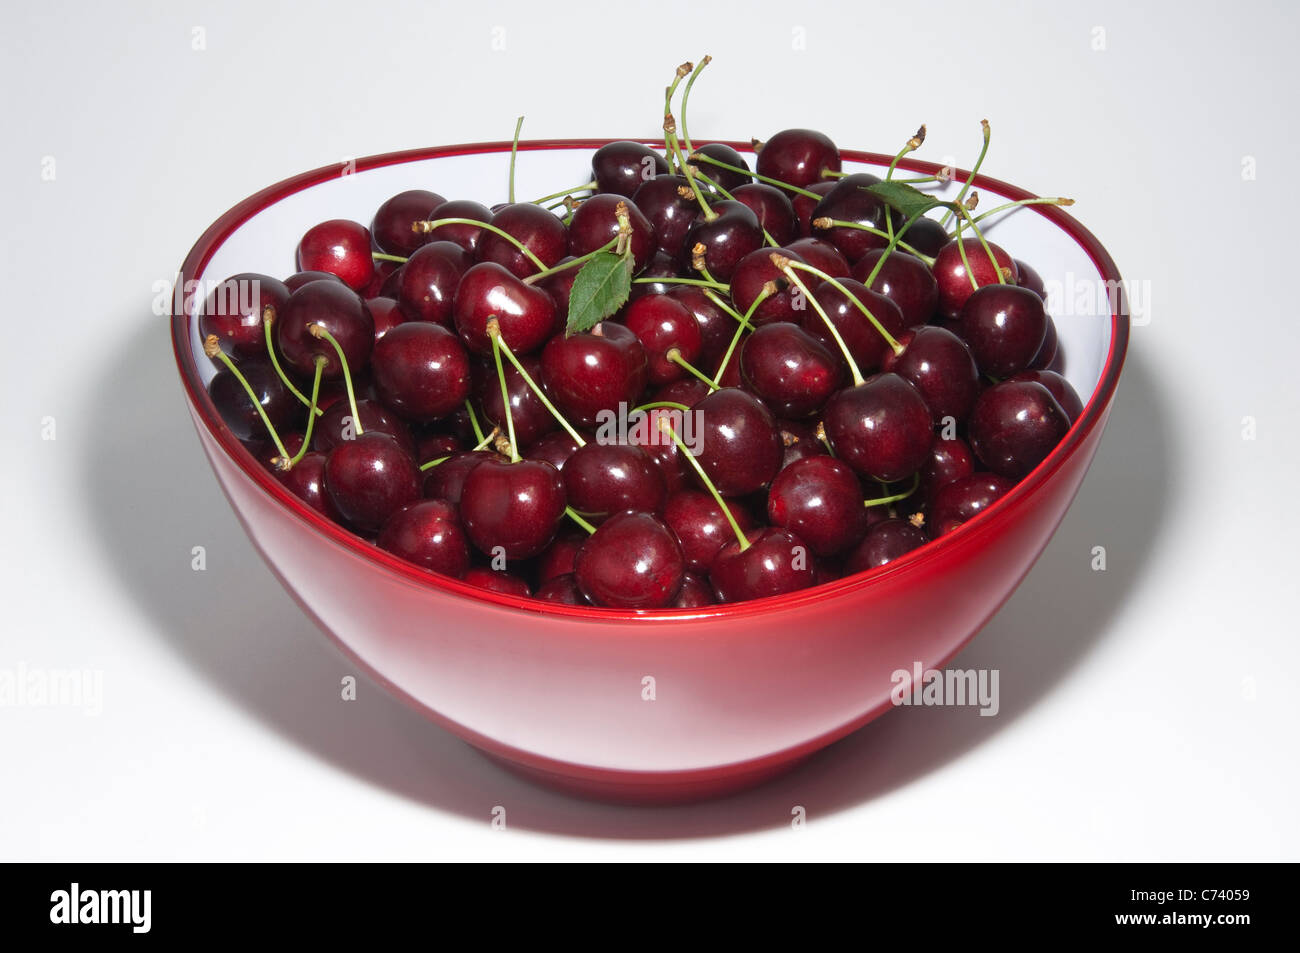 Sweet Cherry (Prunus avium). Ripe cherries in a bowl. Studio picture against a white background. Stock Photo